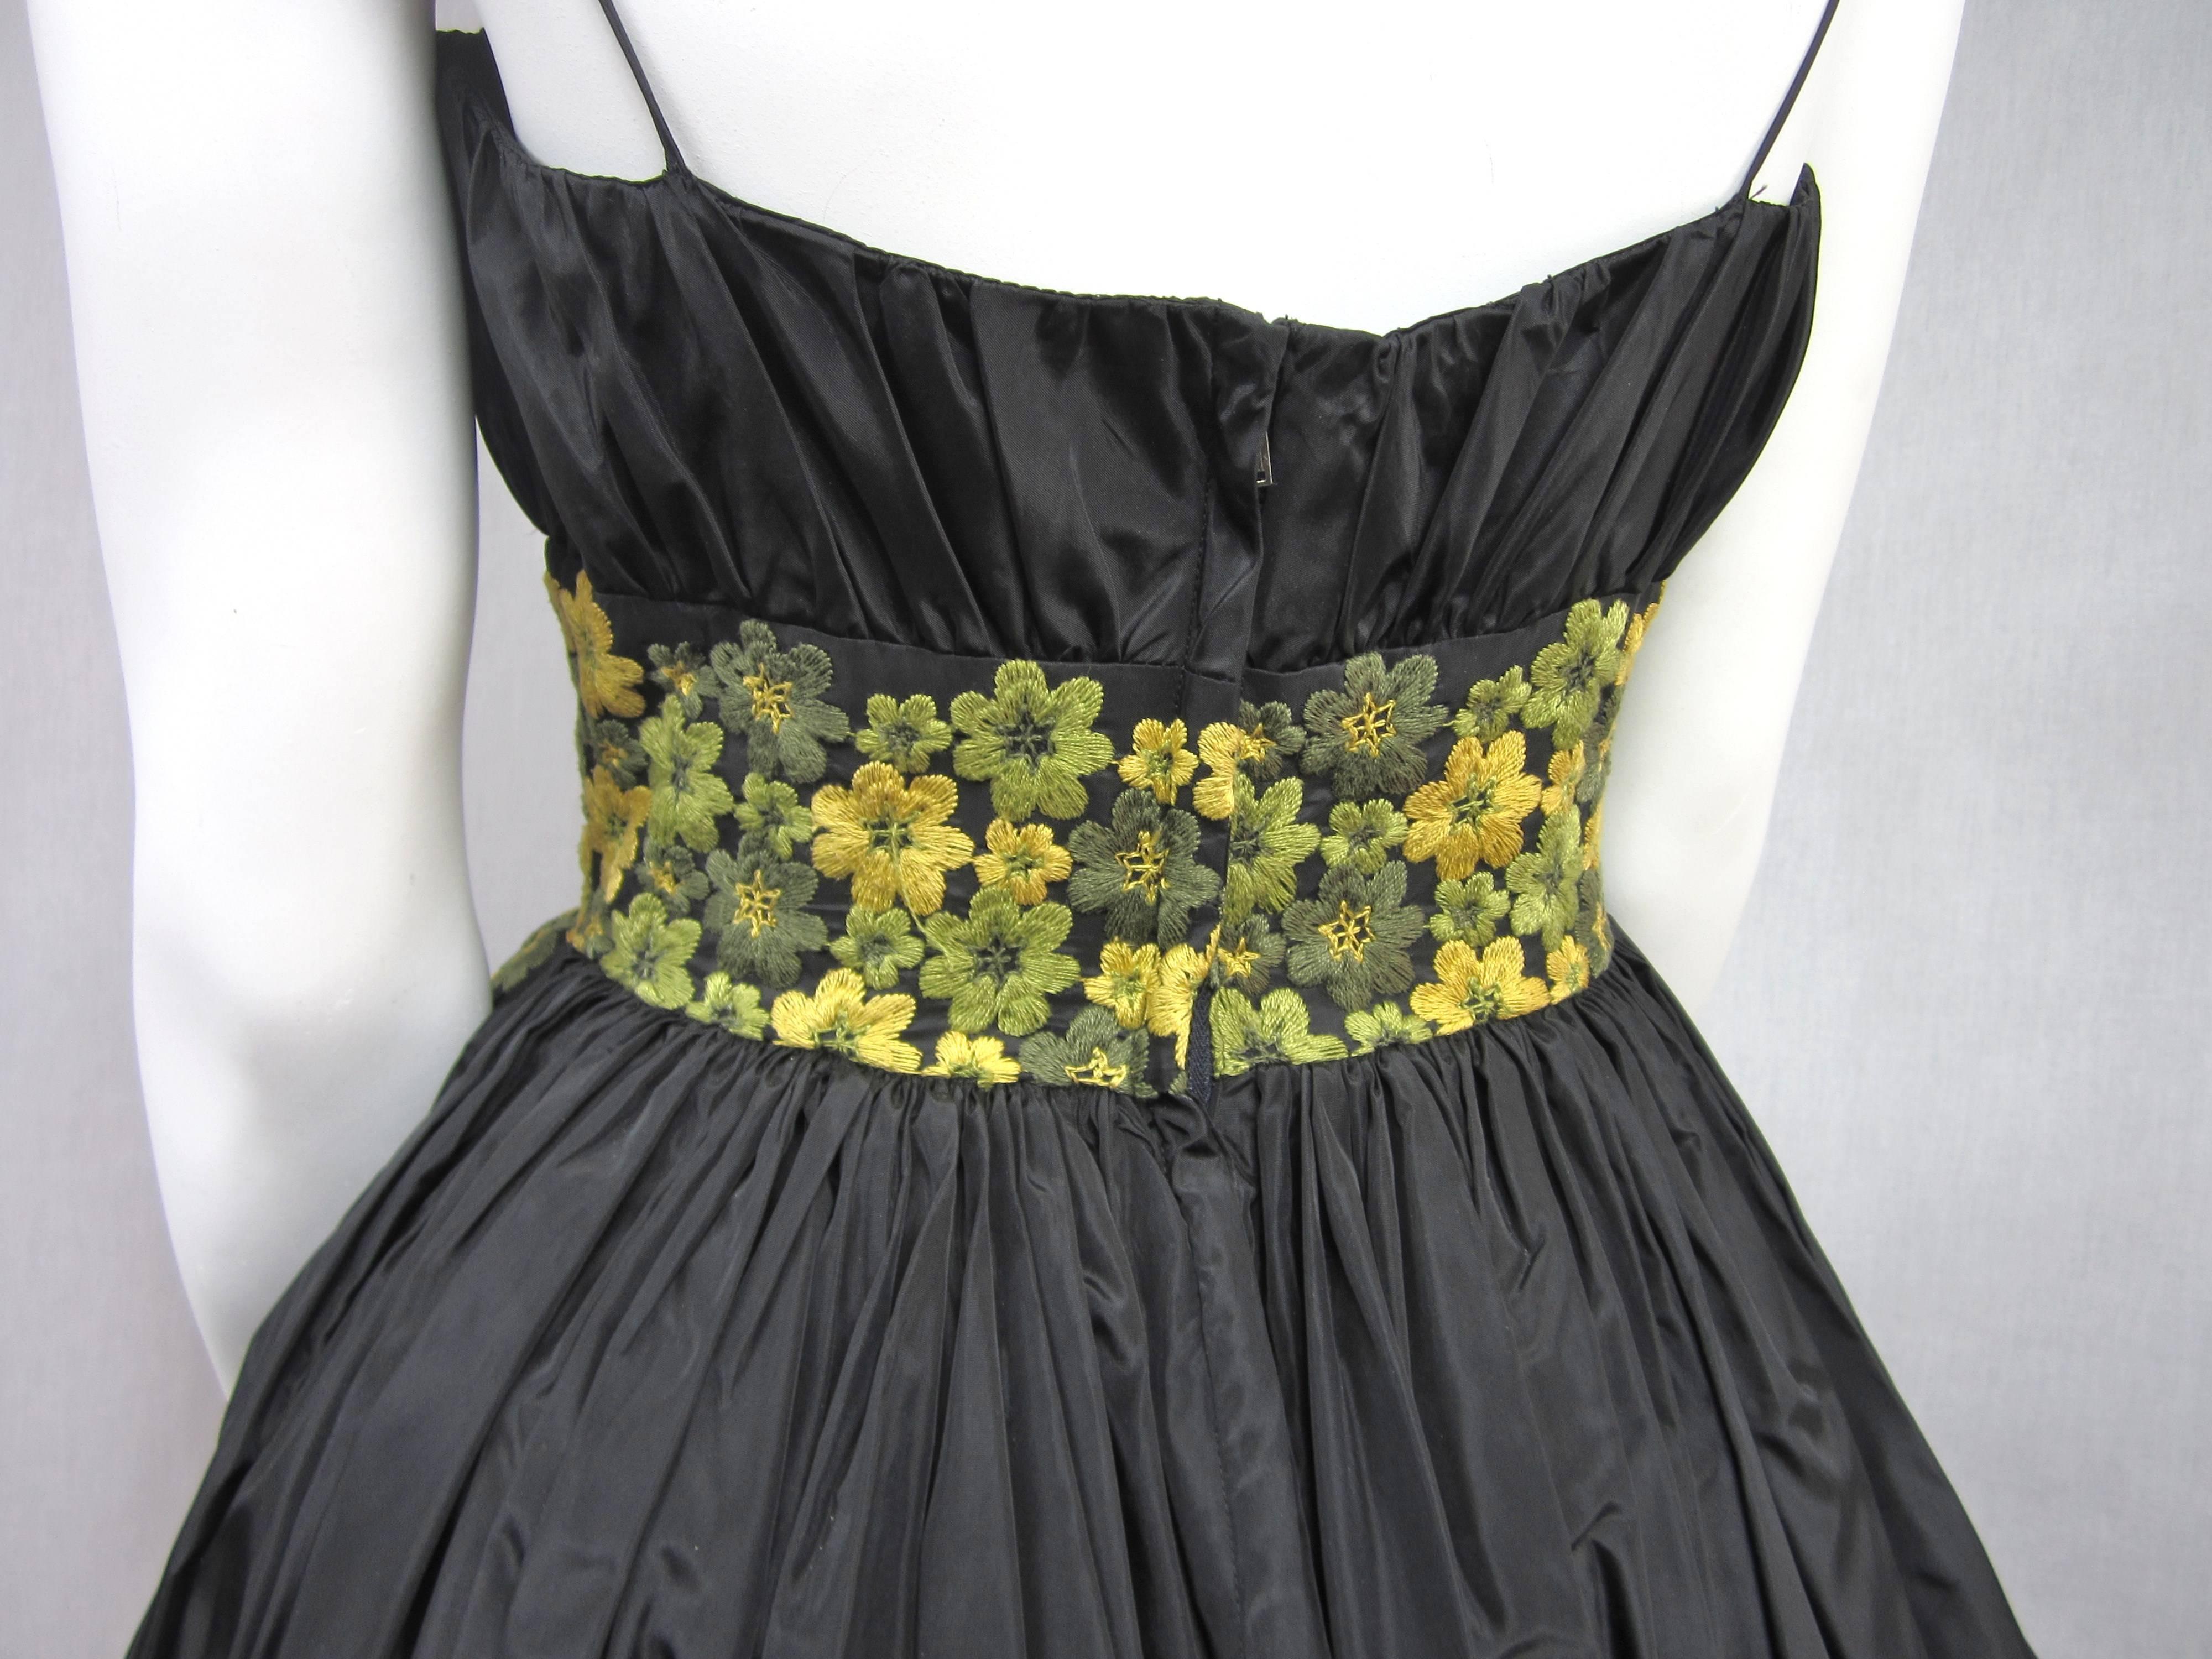  1950s Dress Black Embroidered Shelf Bust Taffeta Party Dress For Sale 3